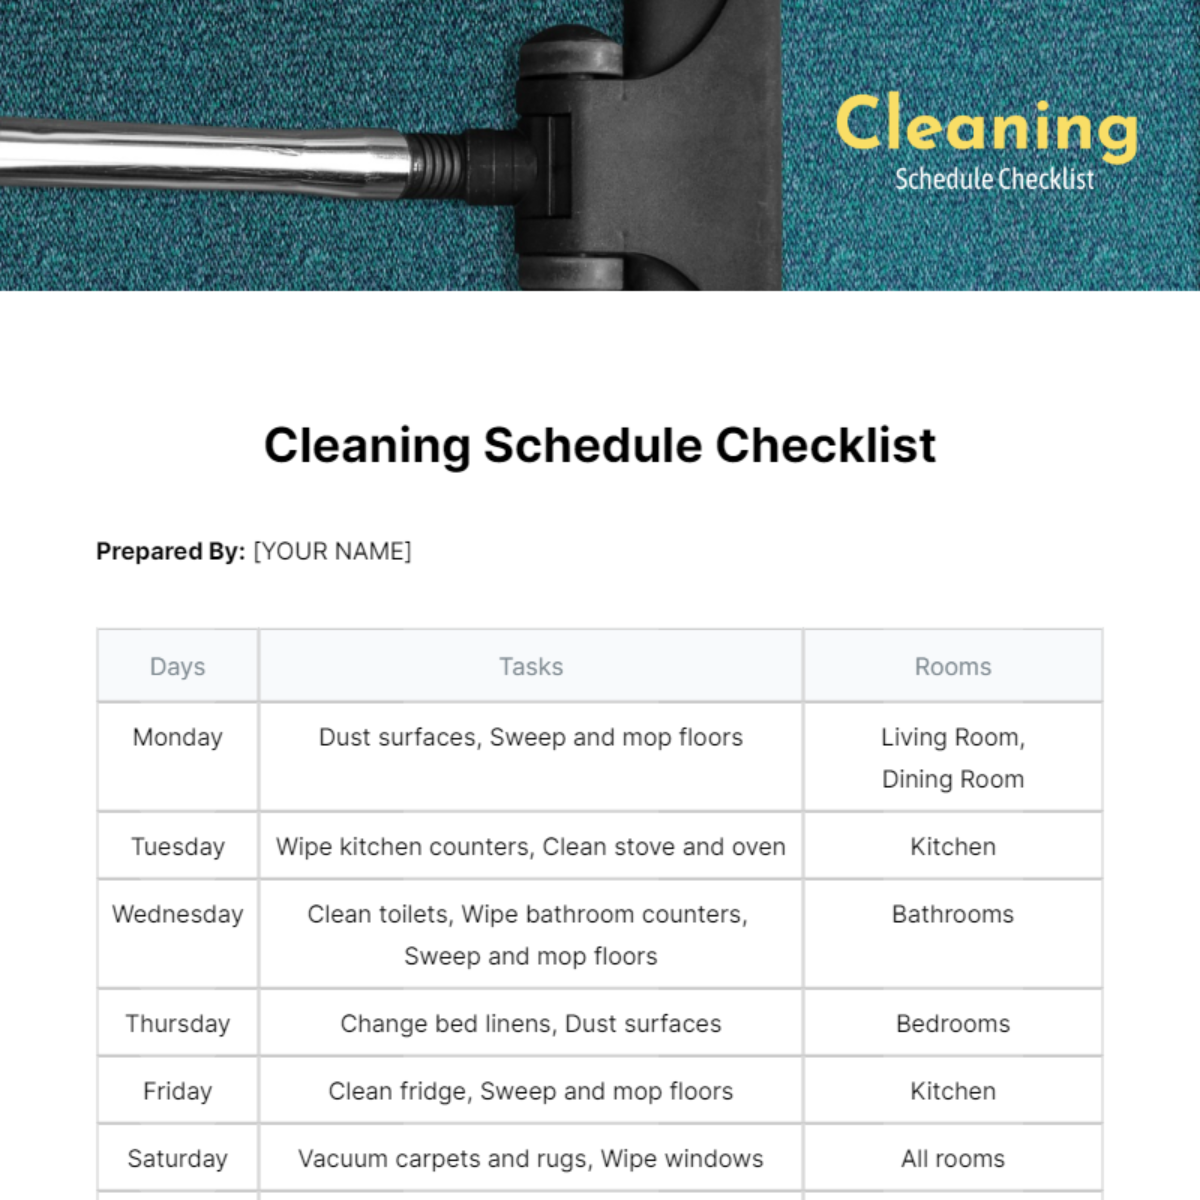 Cleaning Schedule Checklist Template